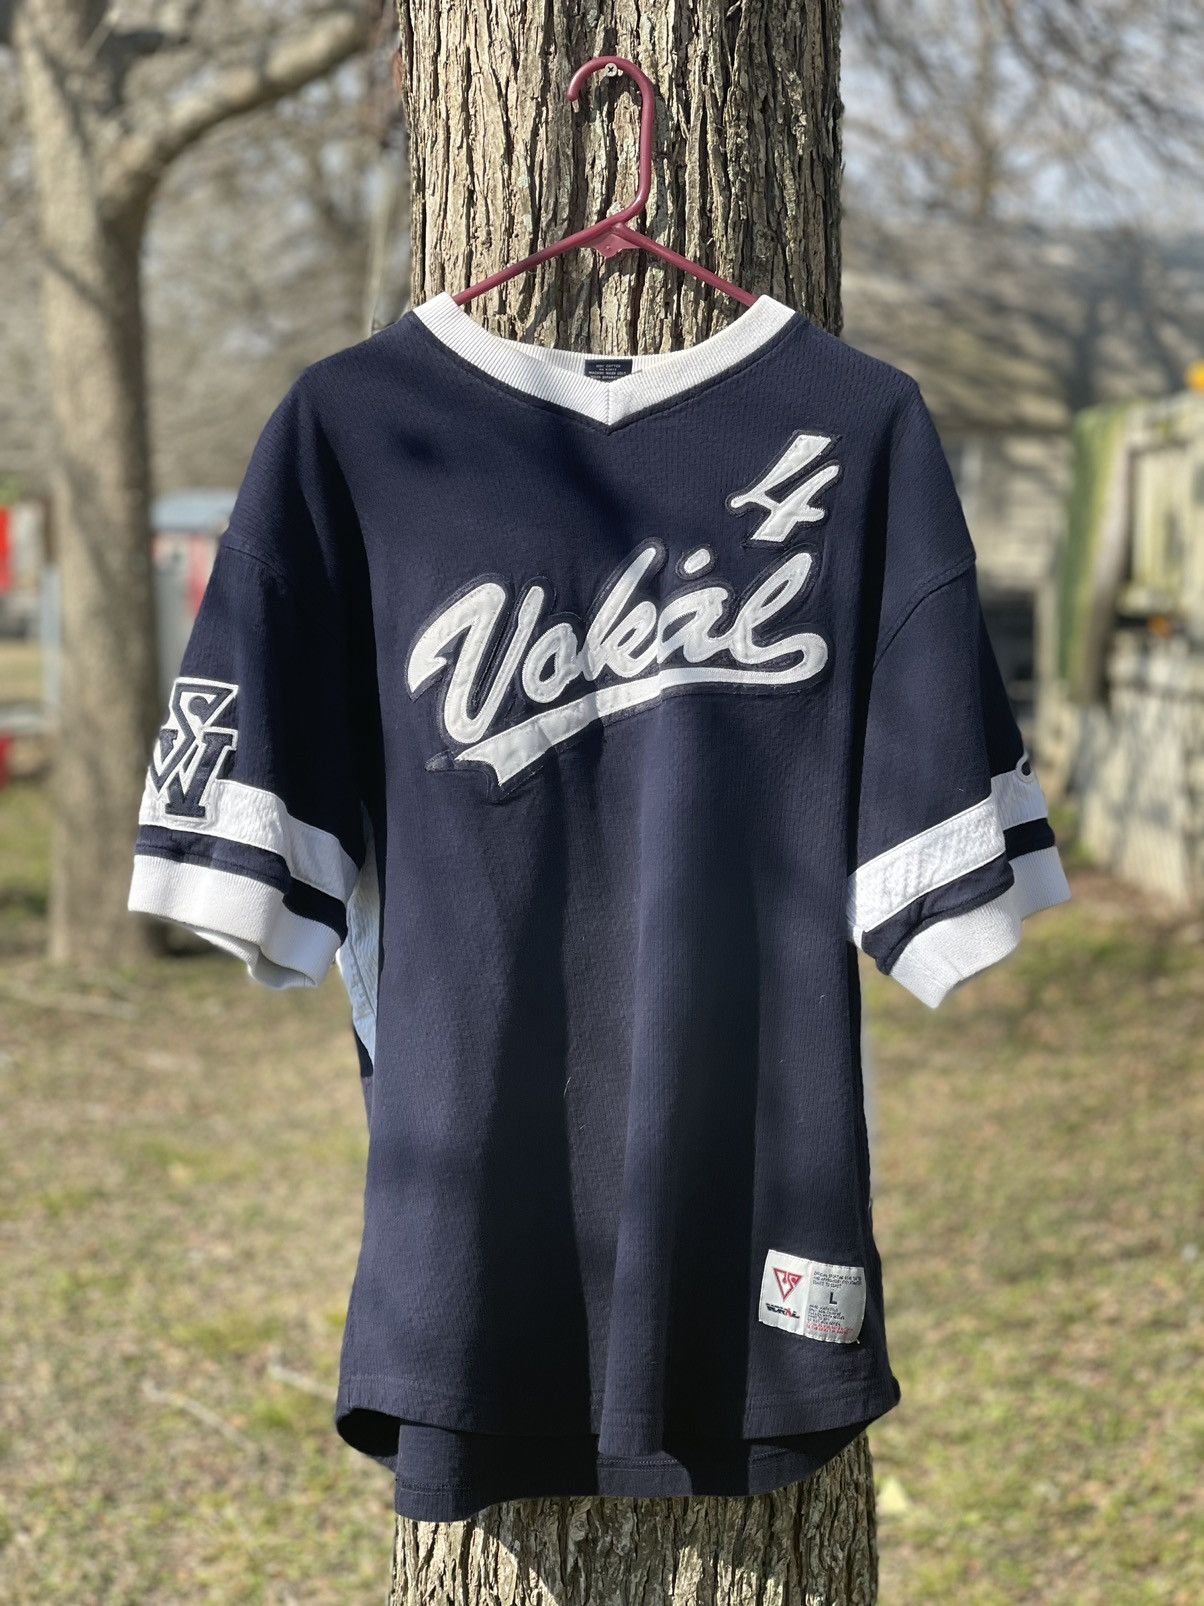 Vintage Vintage Yankees Shirt/Jersey